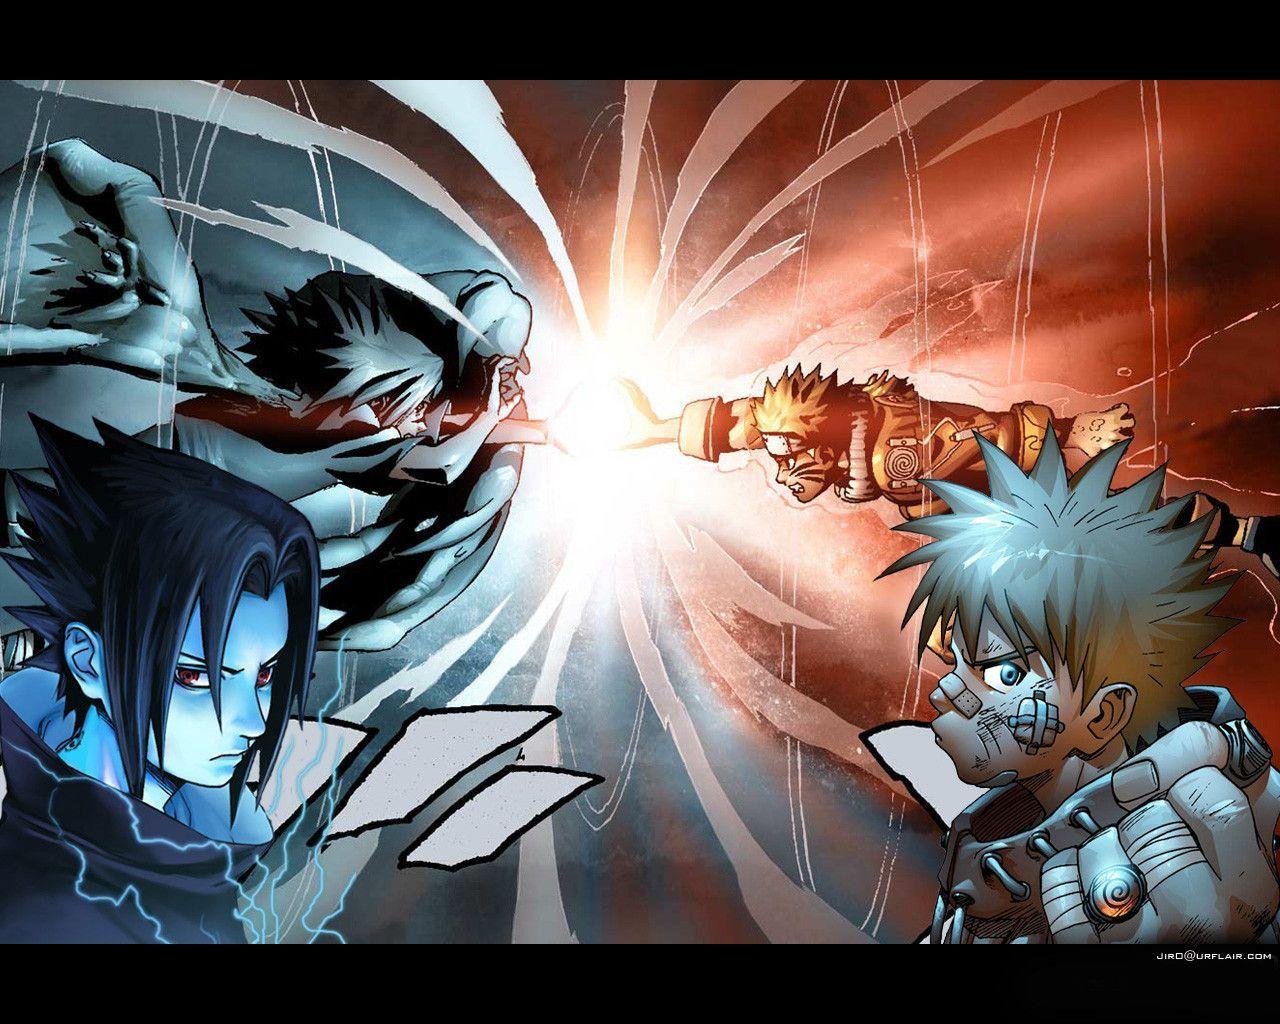 Naruto and Sasuke runs a Duo Gauntlet